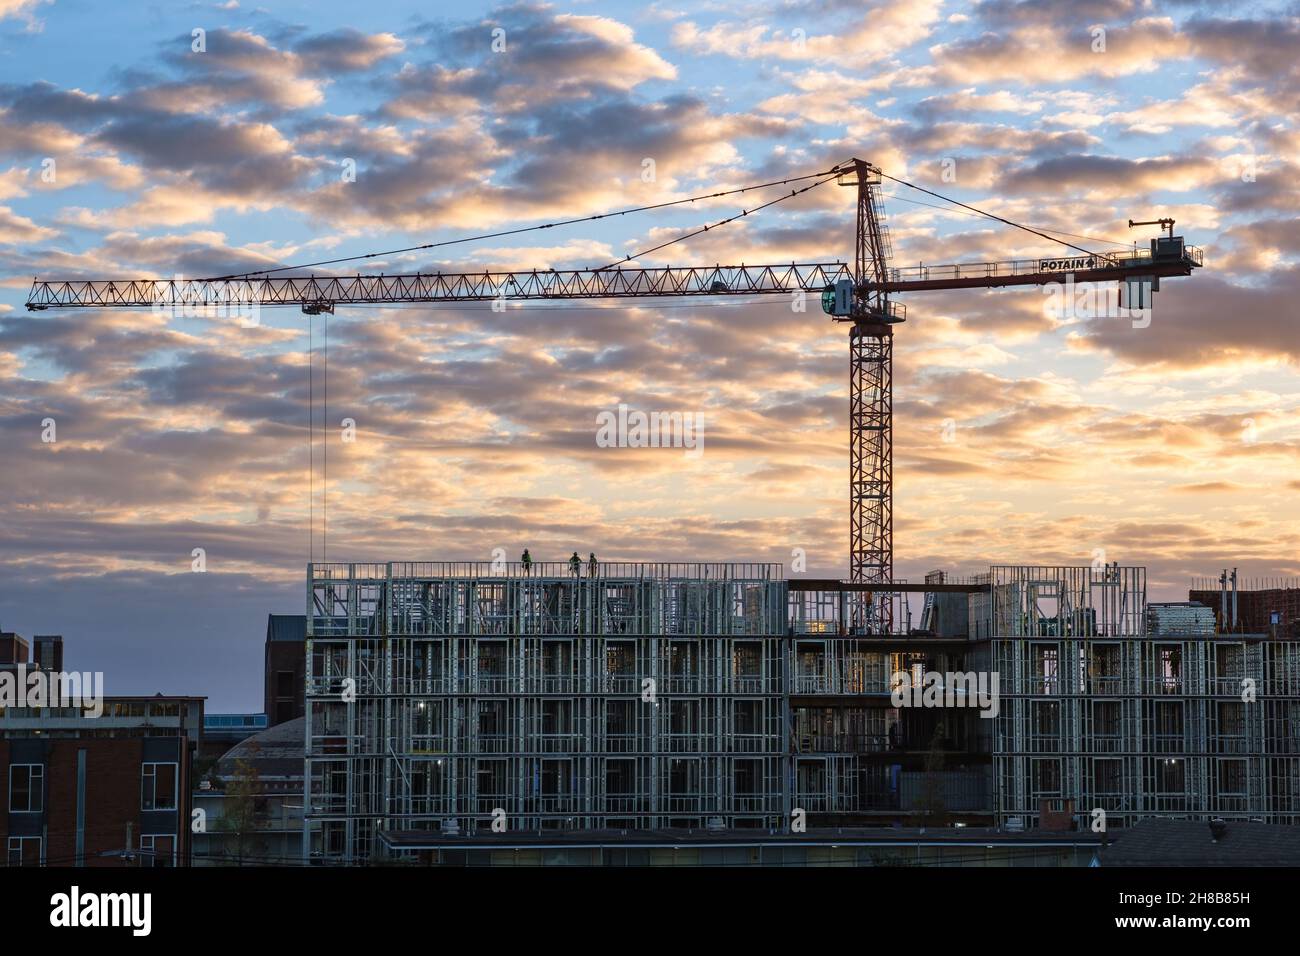 NEW ORLEANS, LA, USA - 24. NOVEMBER 2021: Bauprojekt bei Sonnenuntergang auf dem Campus der Tulane University Stockfoto